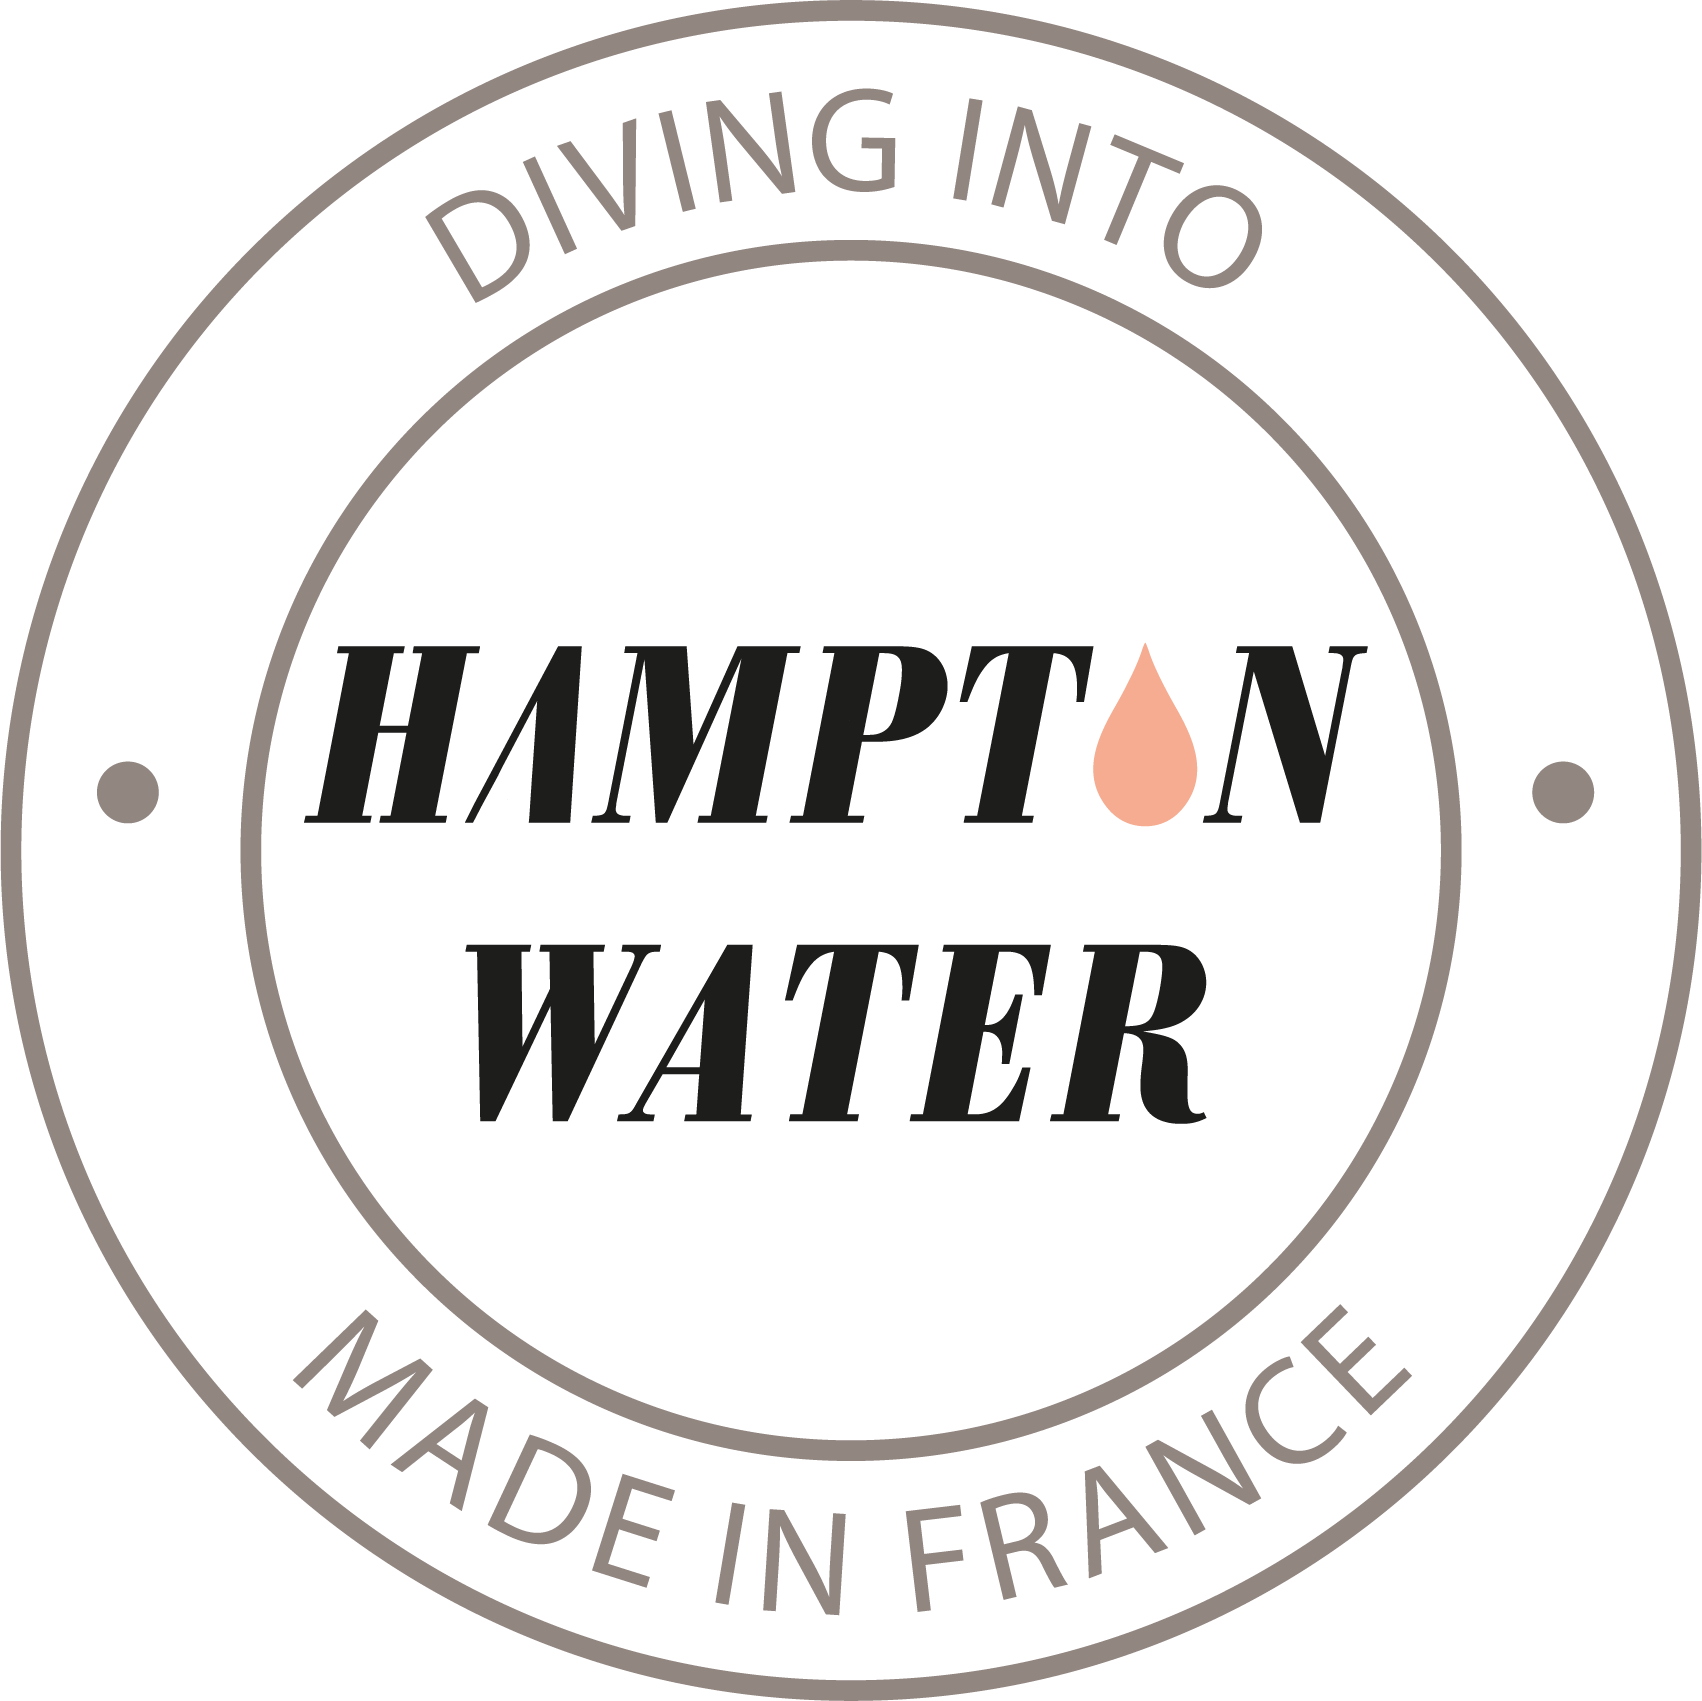 Wine.com Logo - Hampton Water Wine. Rose made in France, enjoyed everywhere